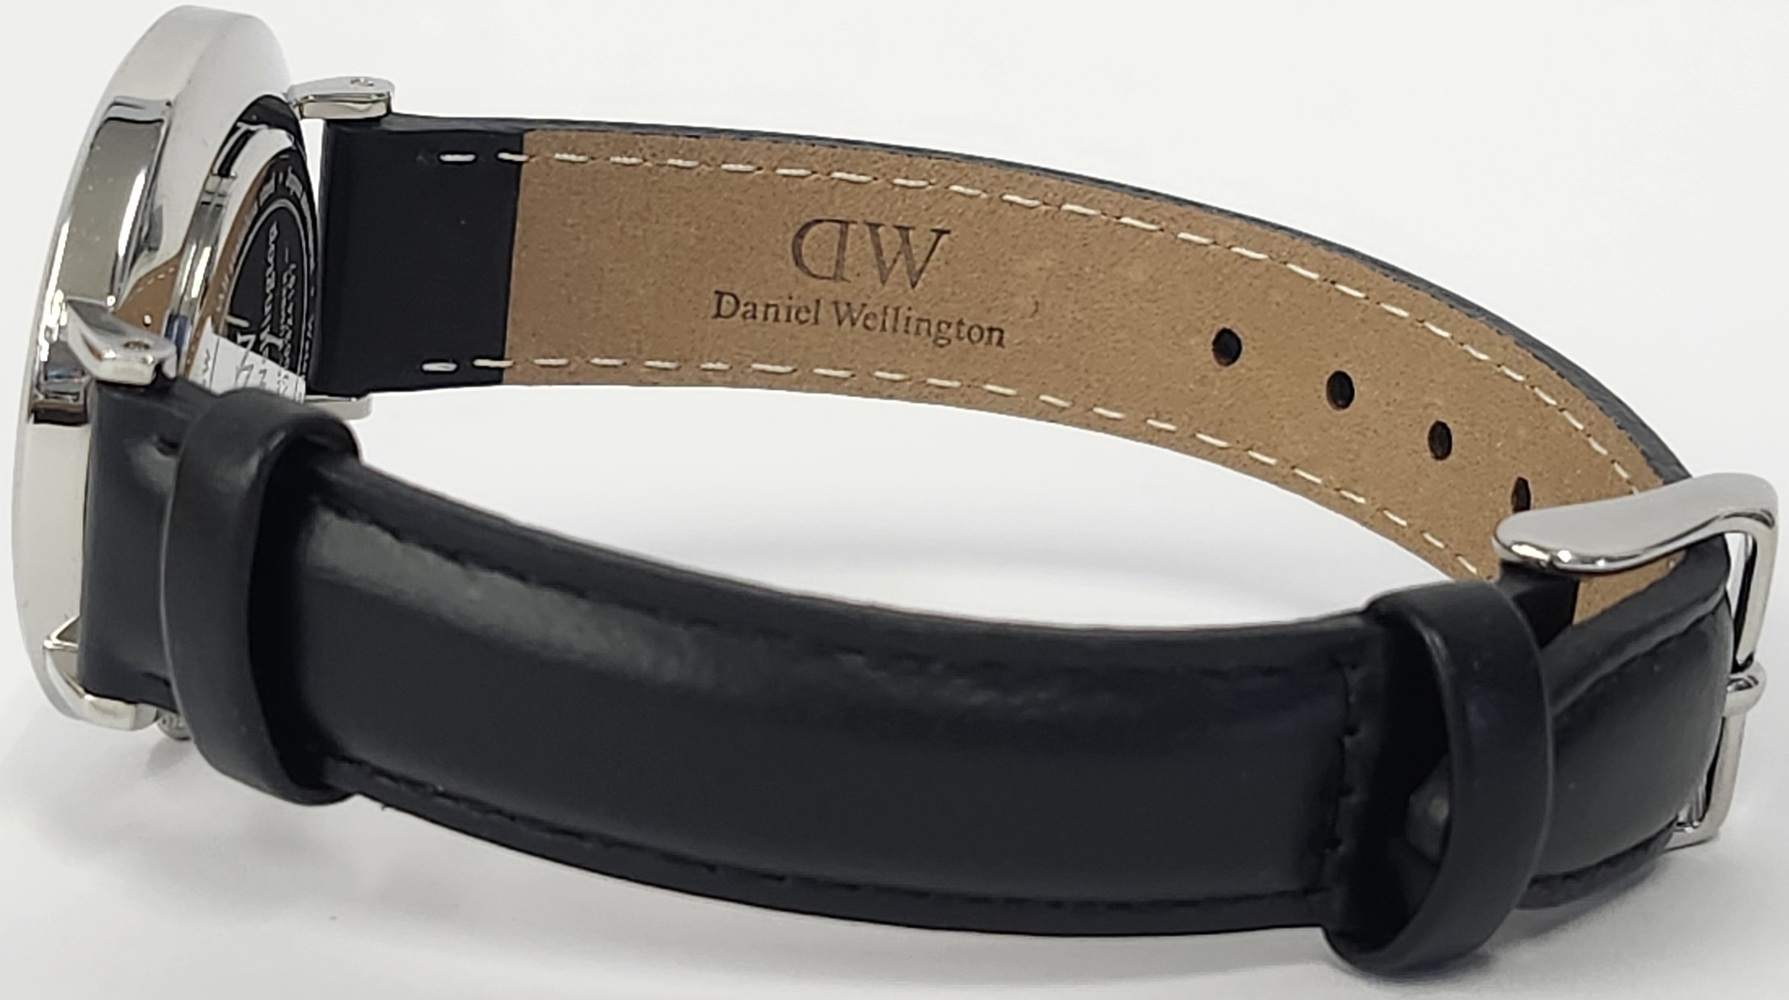 Daniel Wellington B32S6 Womens Wrist Watch with Box, Manual, and Band tool 